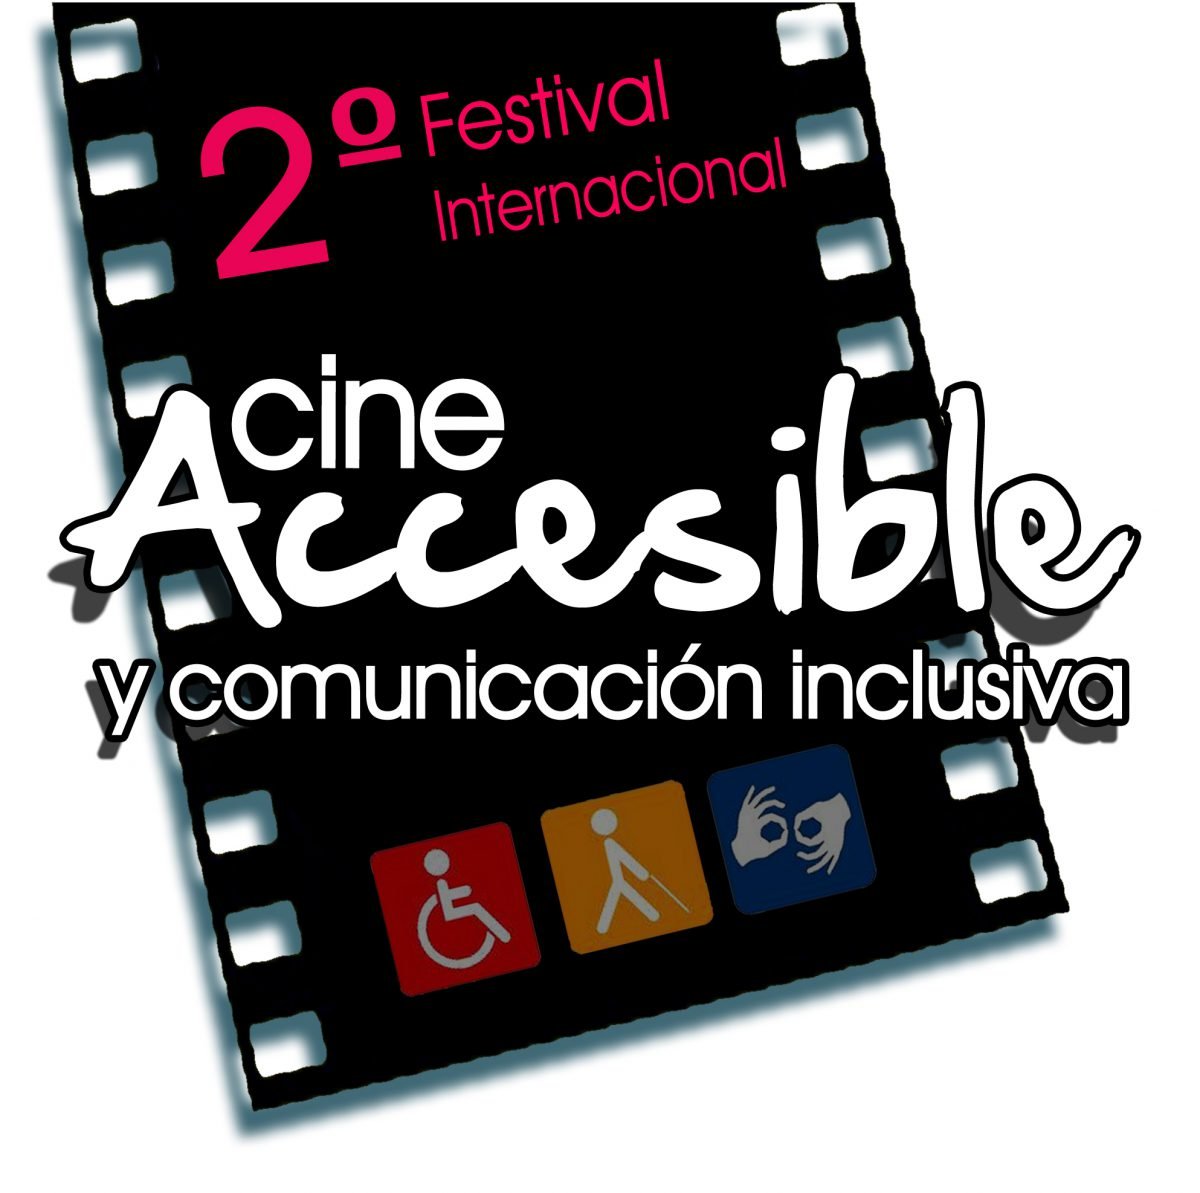  Festival Nacional de Cine Accesible